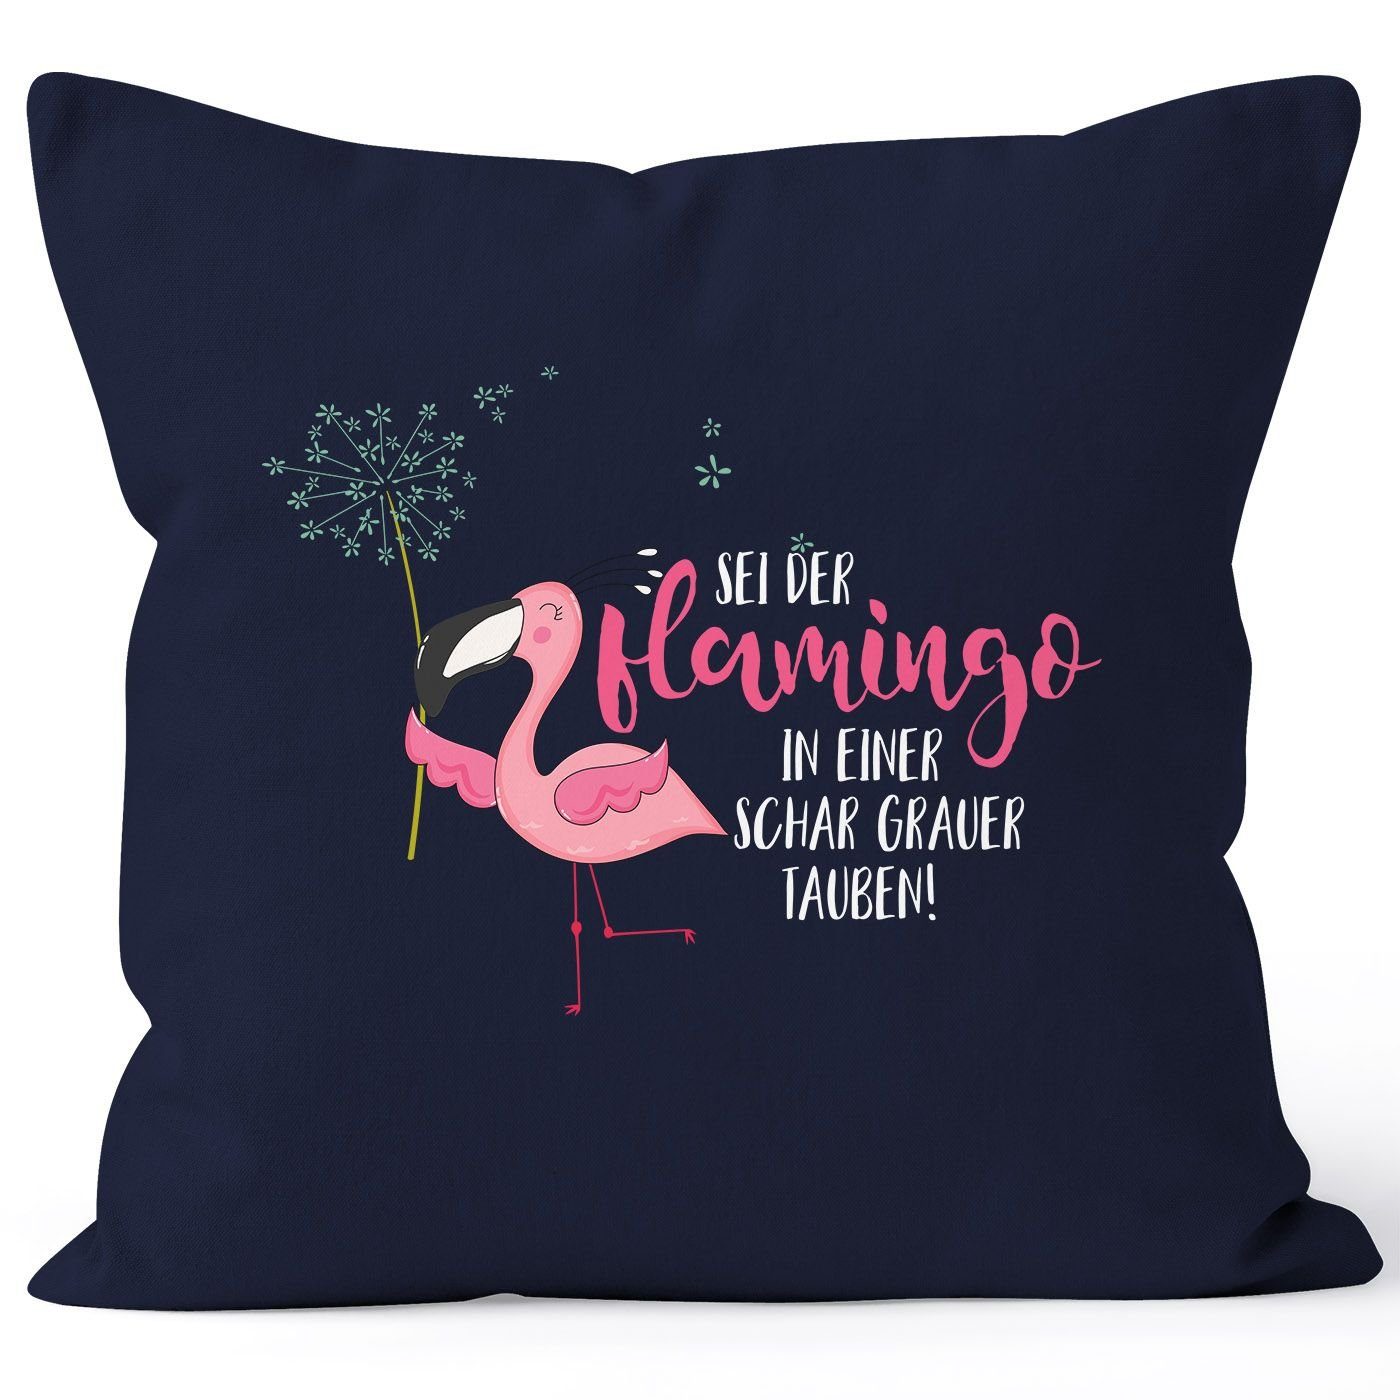 MoonWorks Dekokissen Kissenbezug sei der Flamingo in einer Schar grauer Tauben Flamingo Pusteblume Kissen-Hülle Deko-Kissen 40x40 Baumwolle MoonWorks® navy